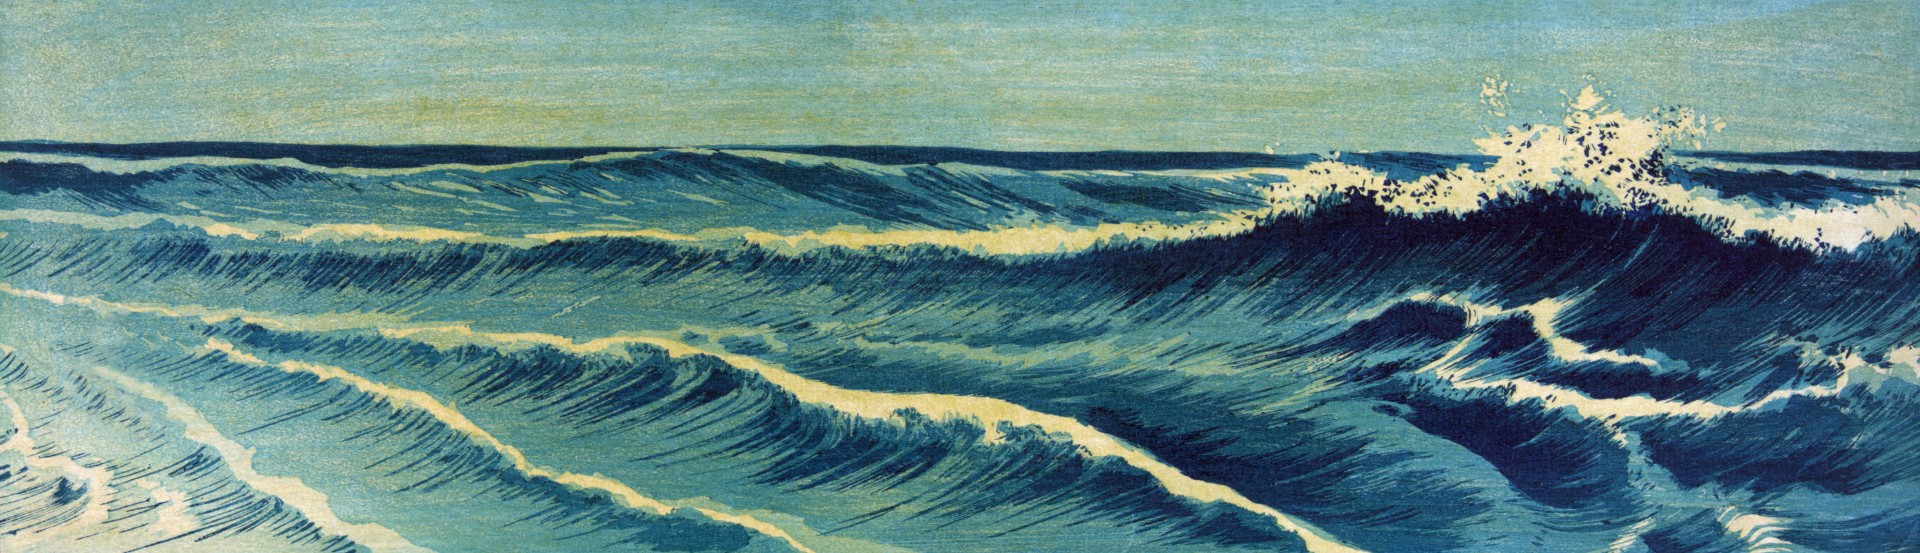 utsuro-bune-japanese-waves-painting